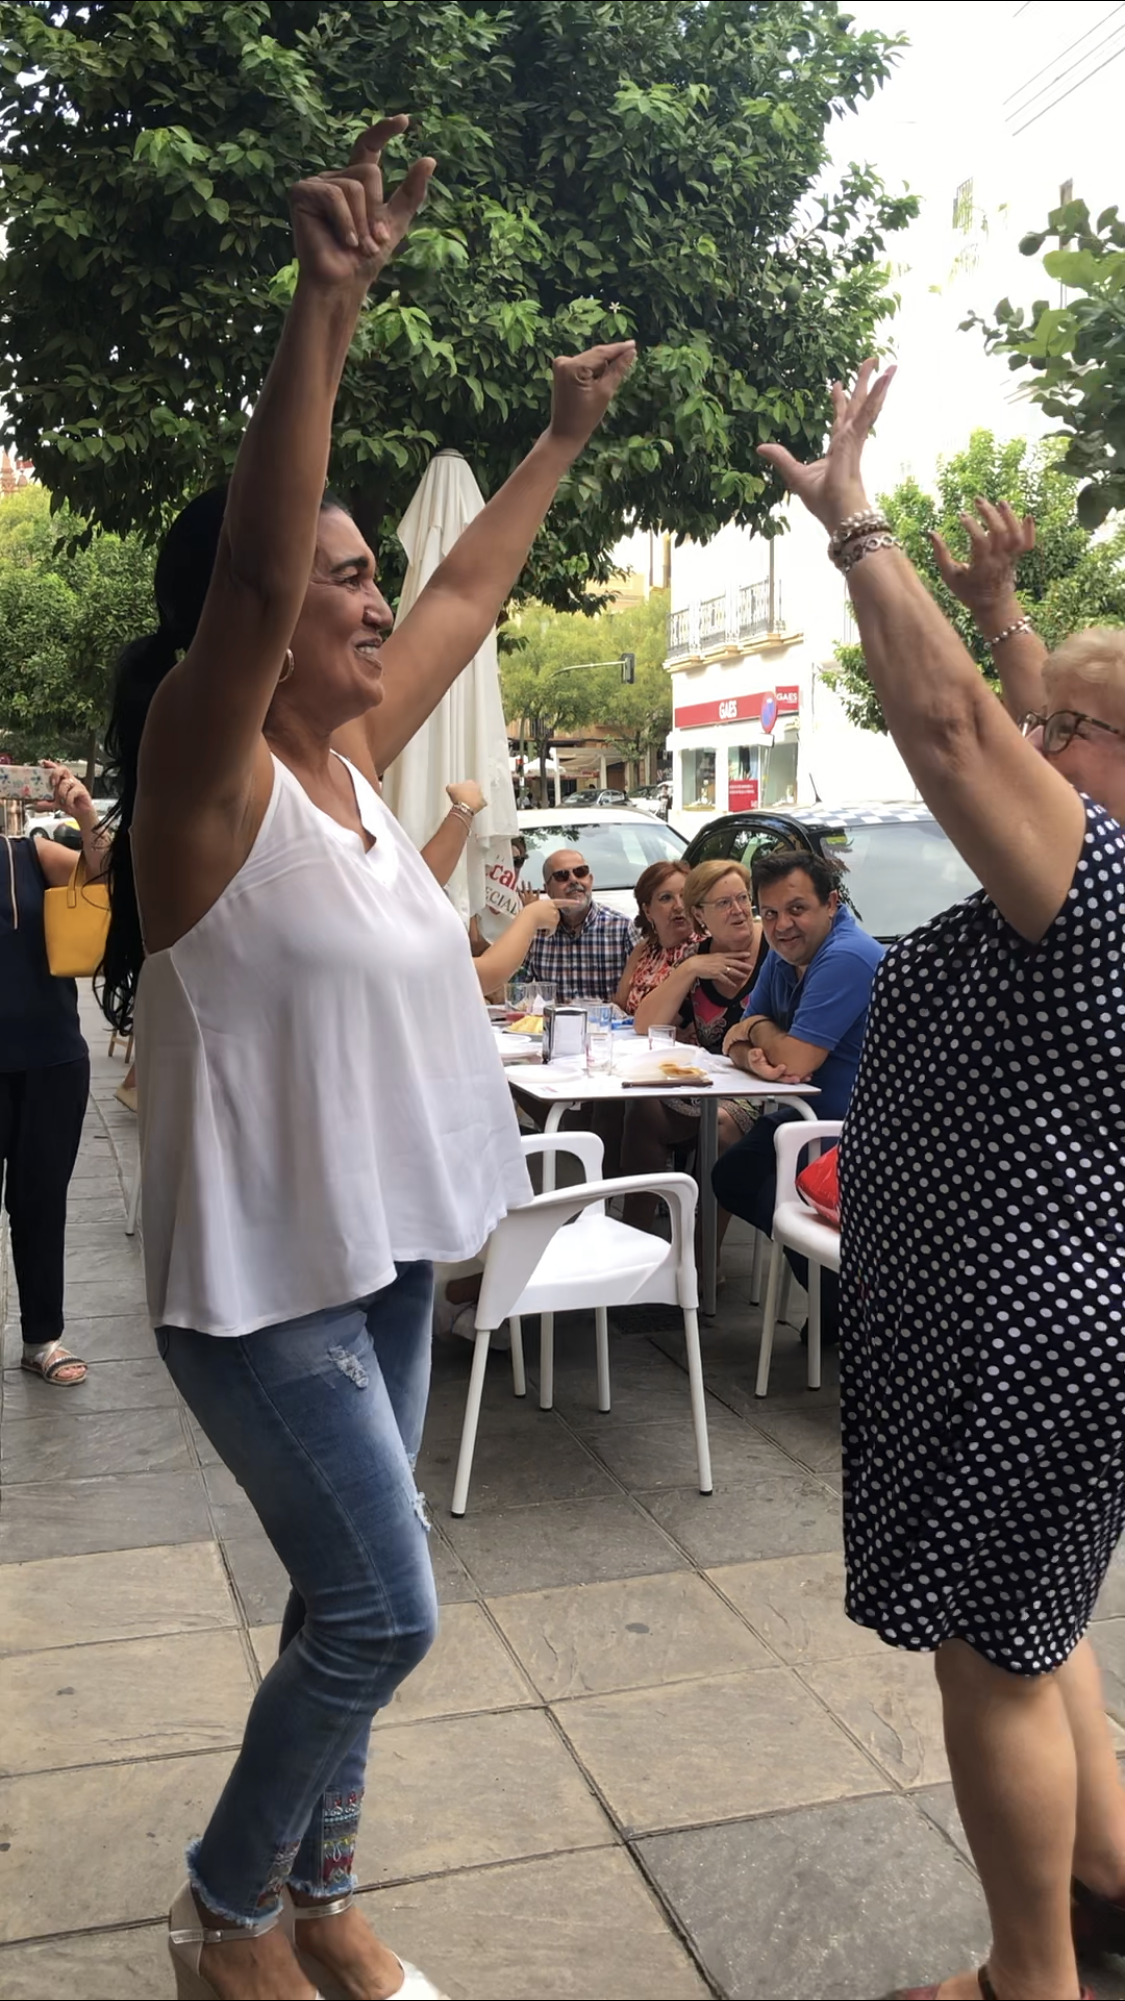 Dancing flamenco in the street